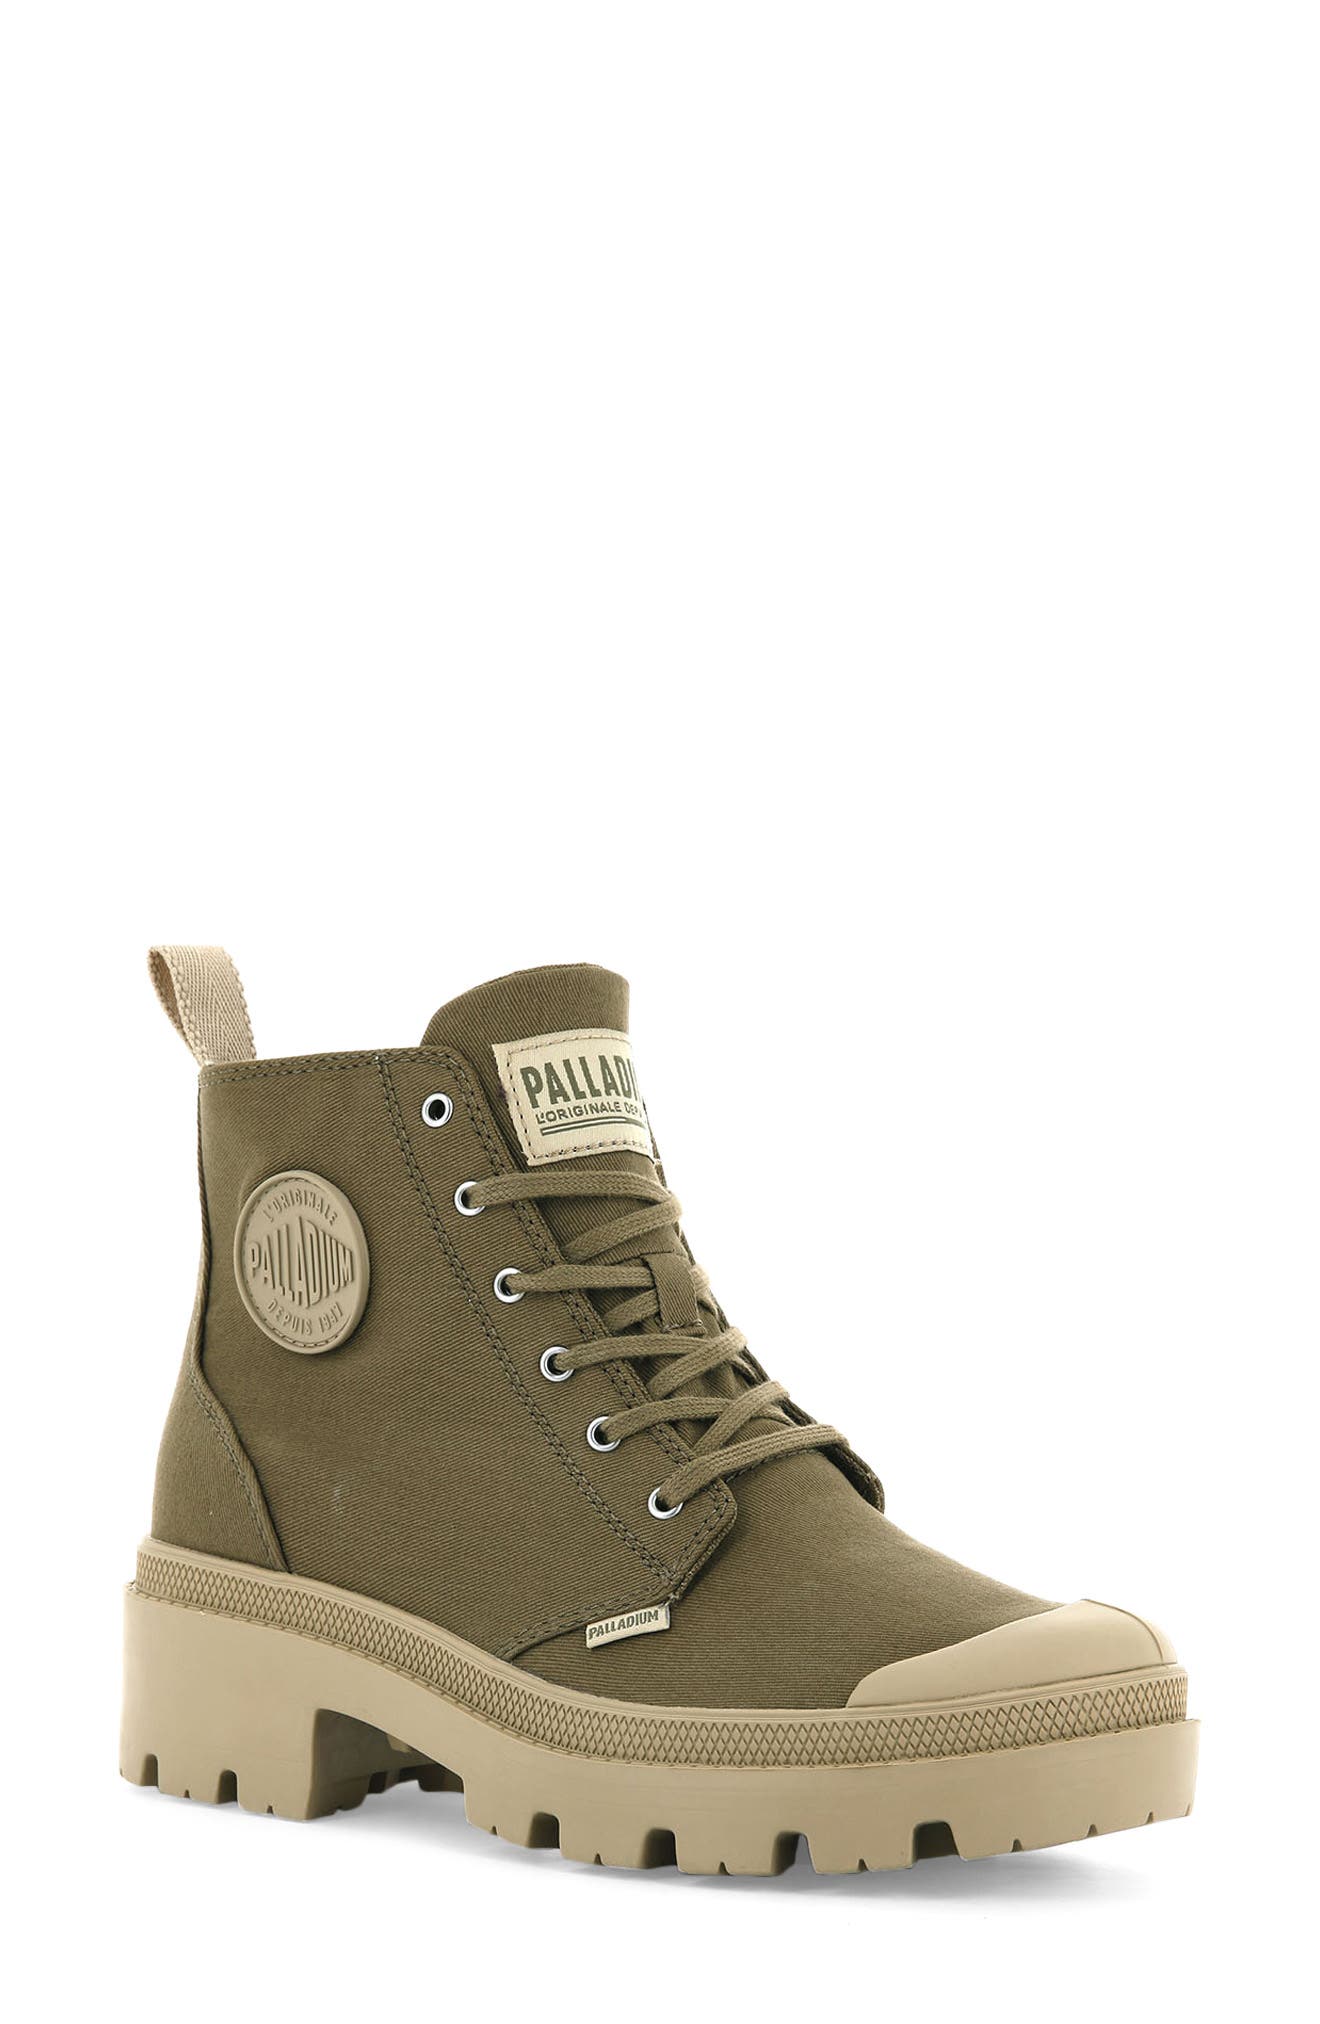 Palladium Pampa Baggy Nubuk Schuhe Sneaker High Top Unisex Boots black 76434-008 